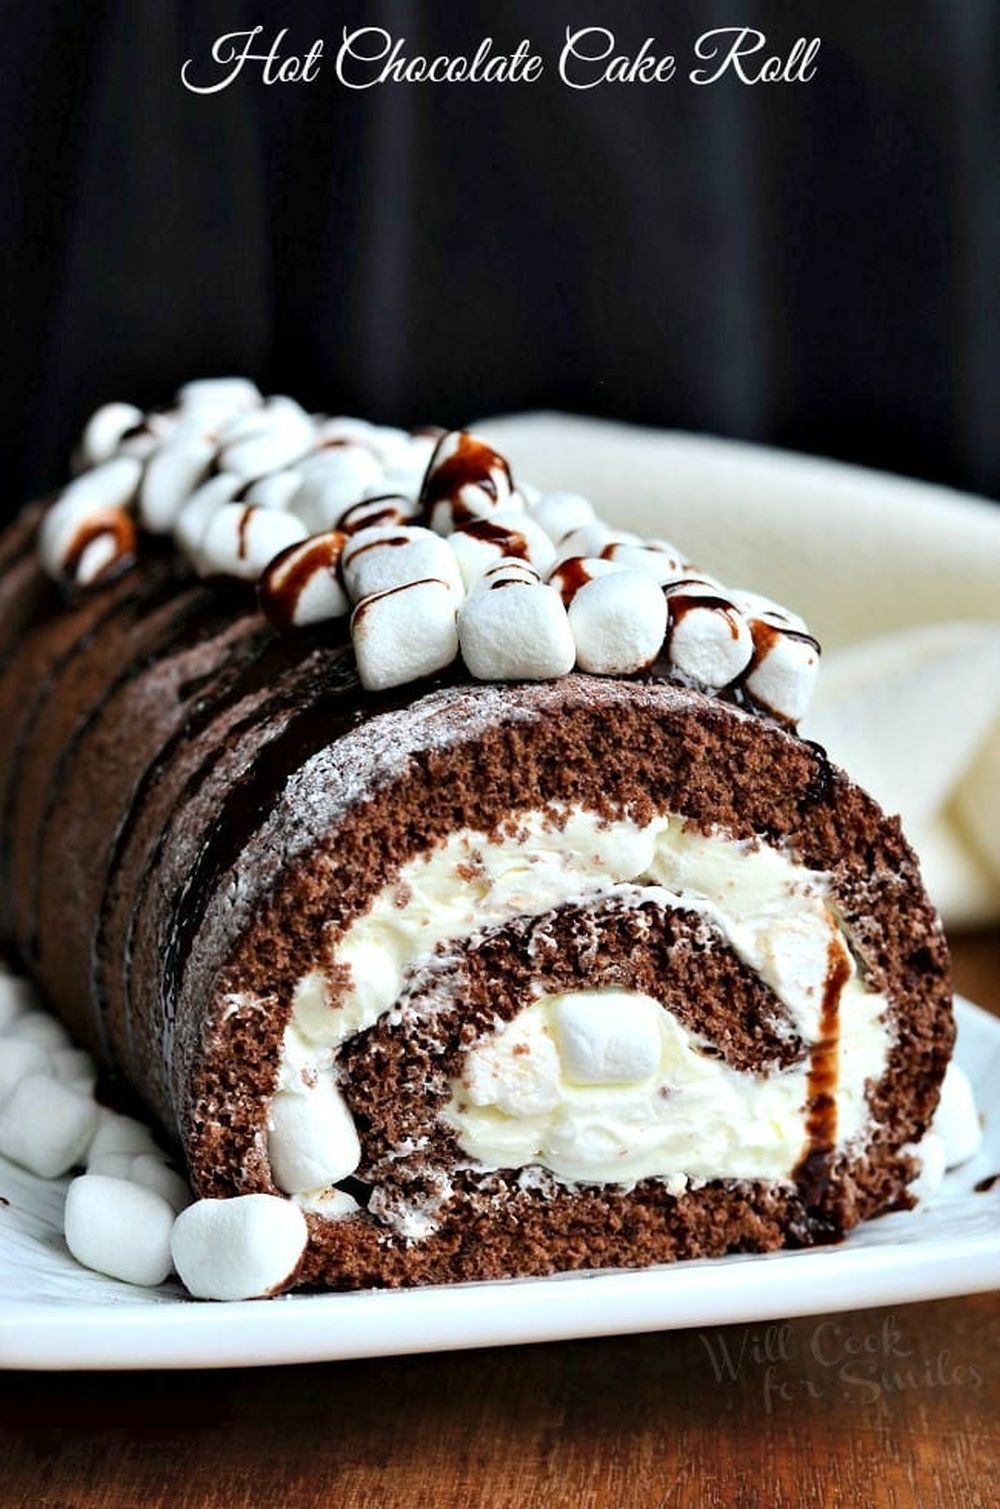 Hot chocolate cake roll tasty valentine’s day desserts